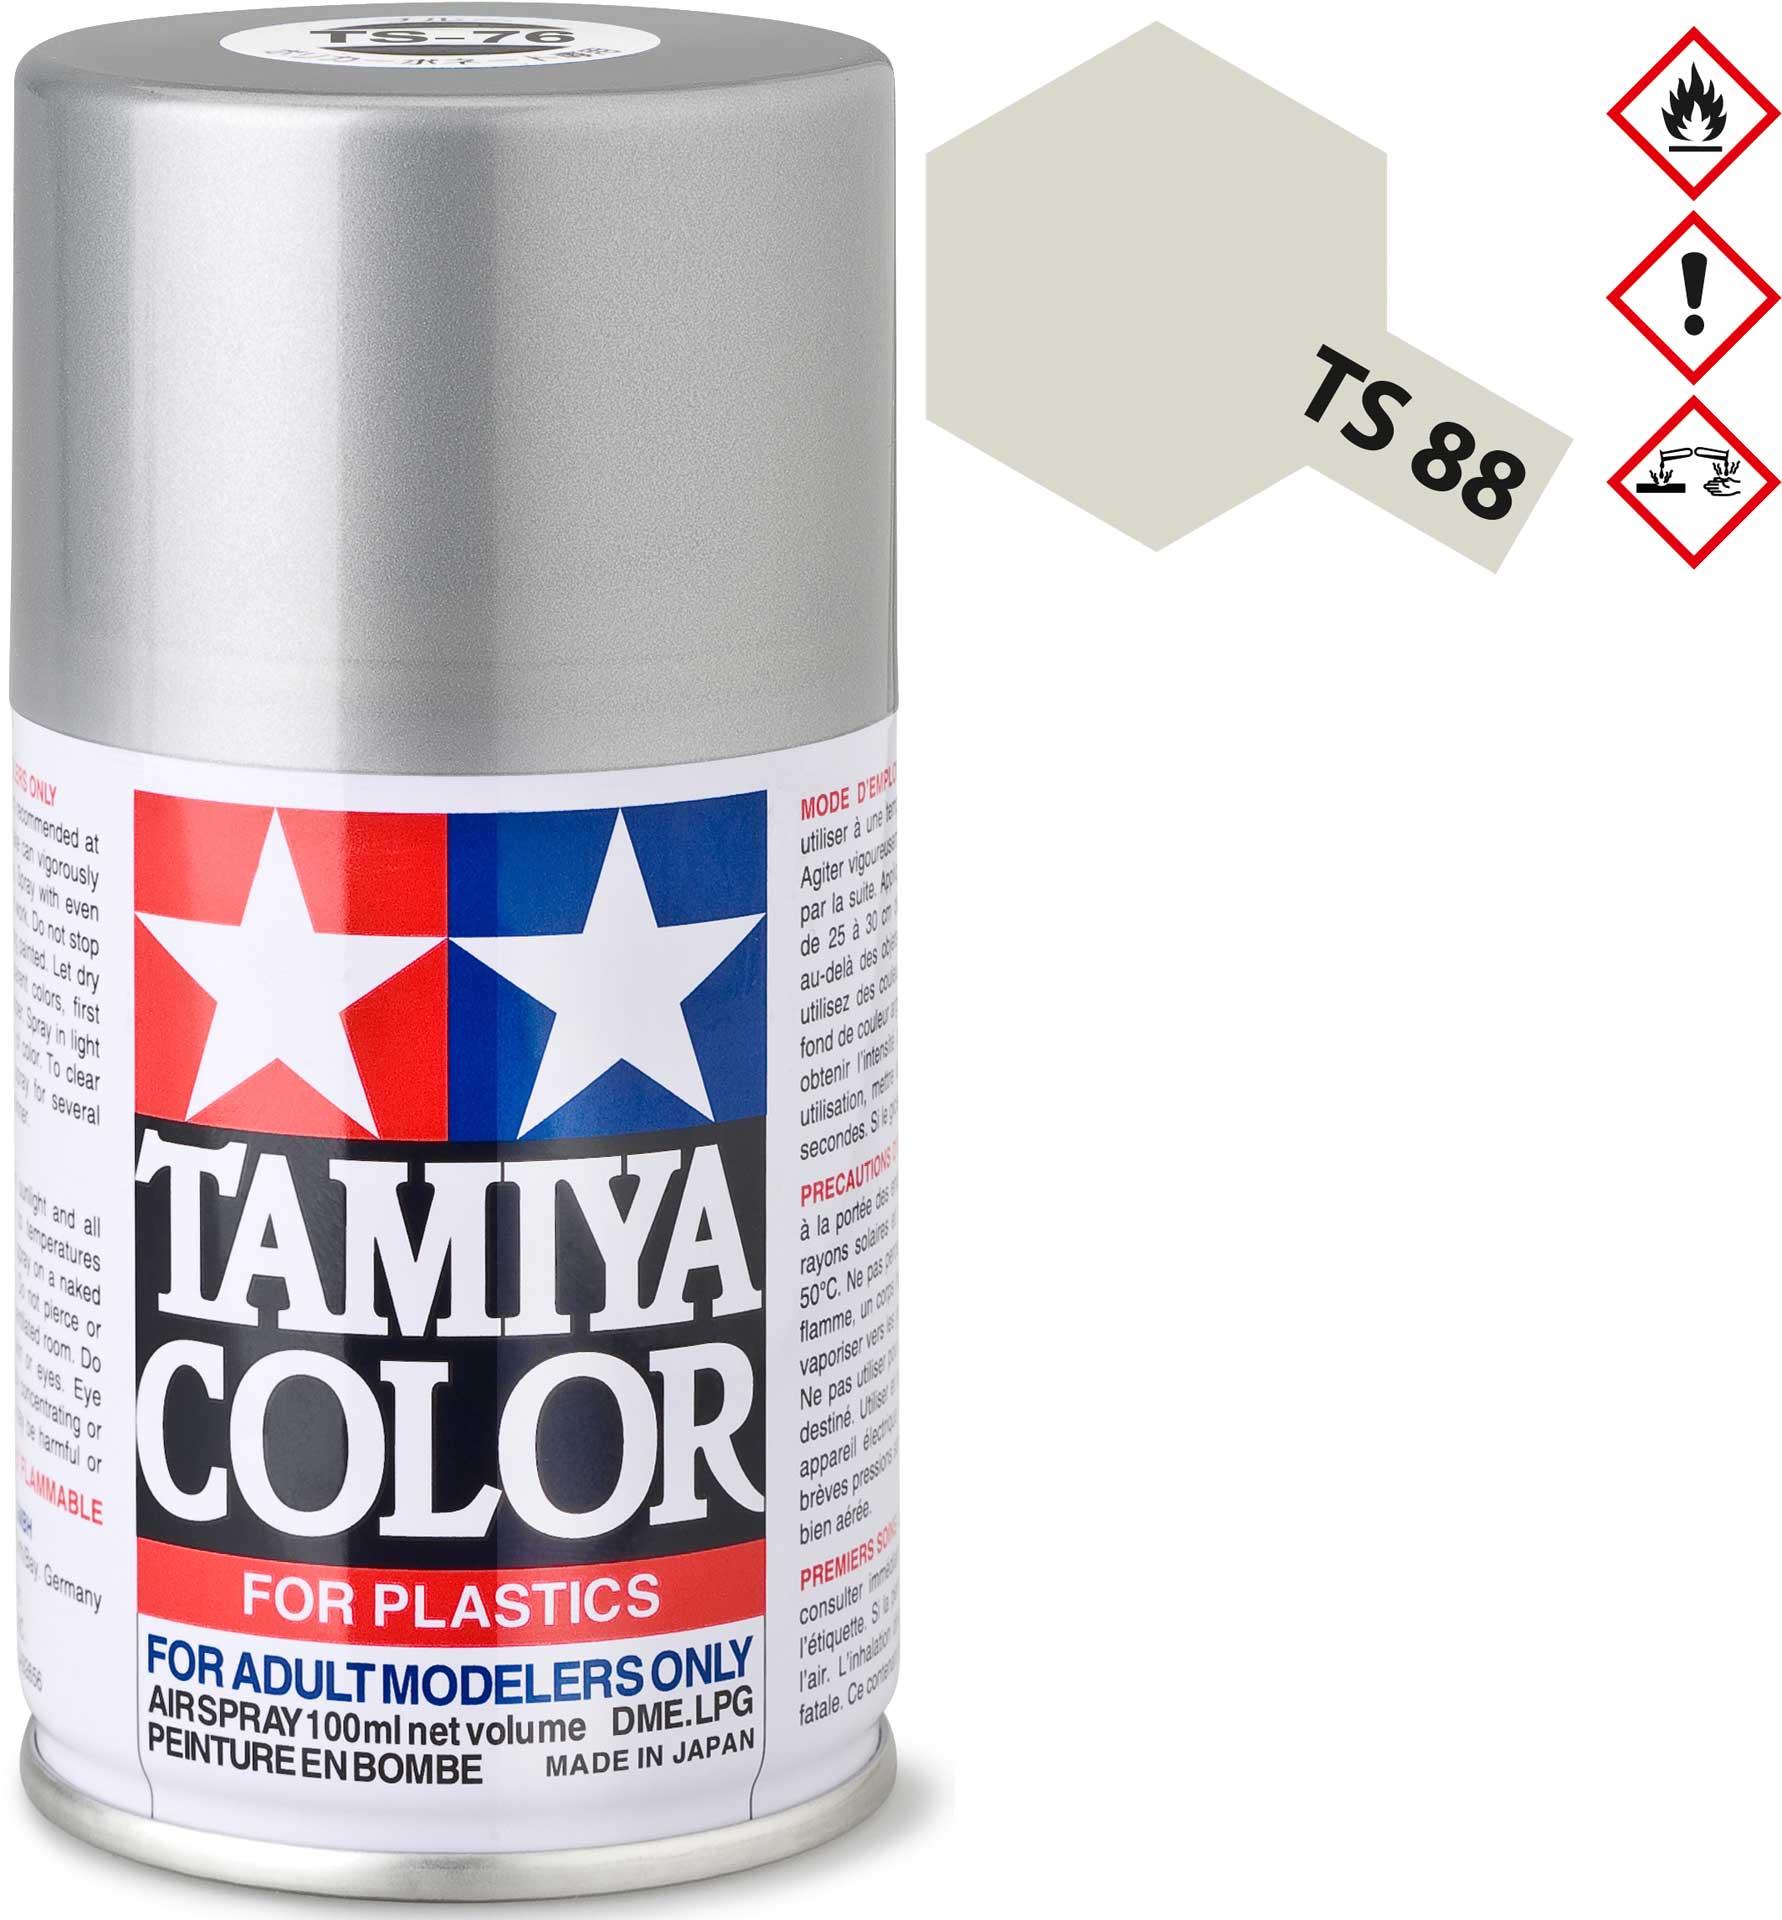 TAMIYA TS-88 Titan Silber glänzend Kunststoff Spray 100ml